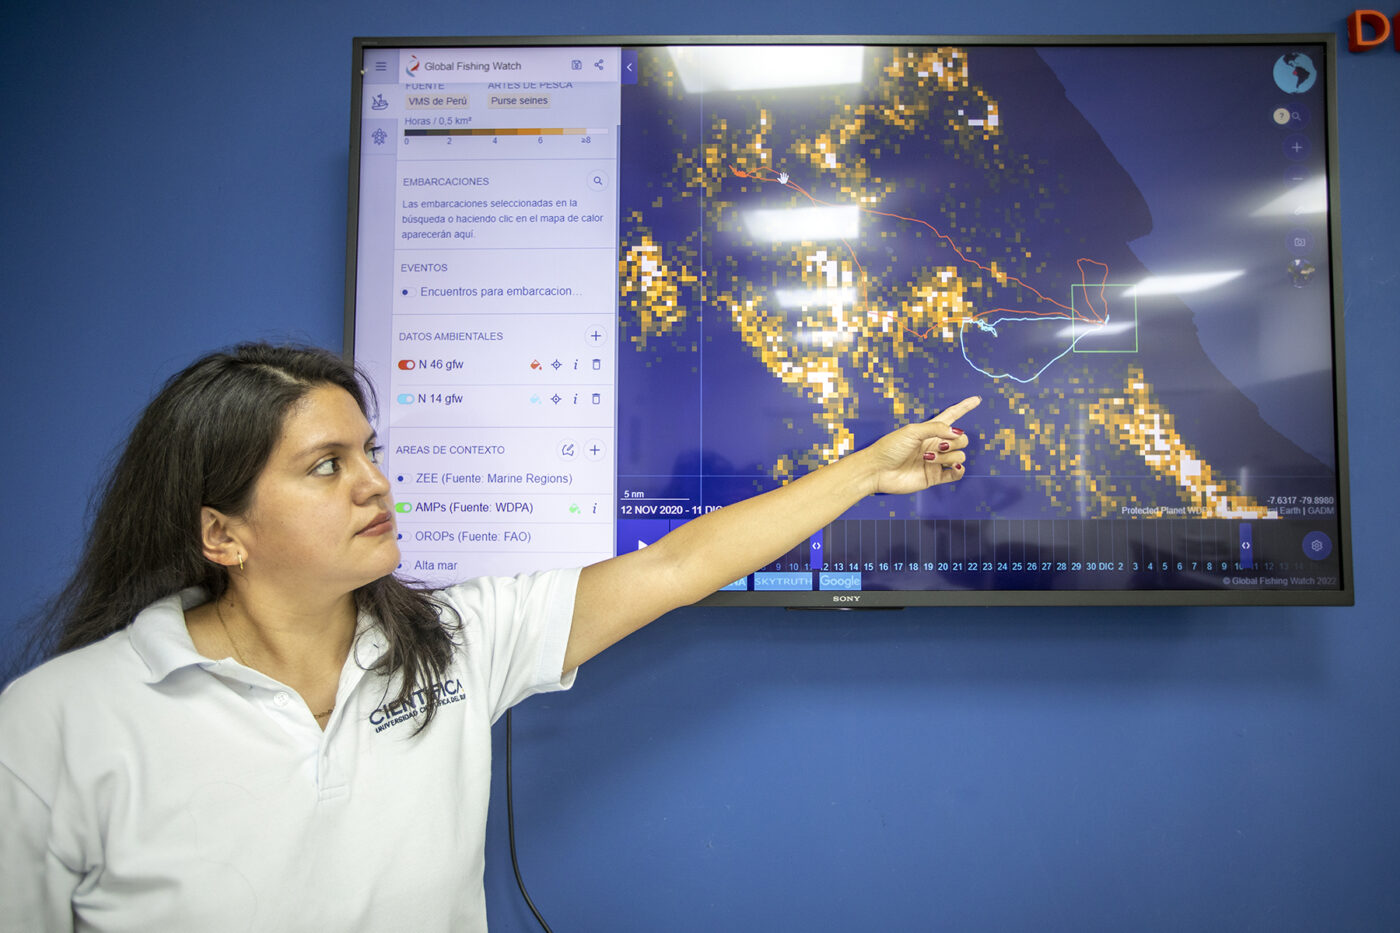 Cinthia Irigoin señala el mapa de Global Fishing Watch en la pantalla